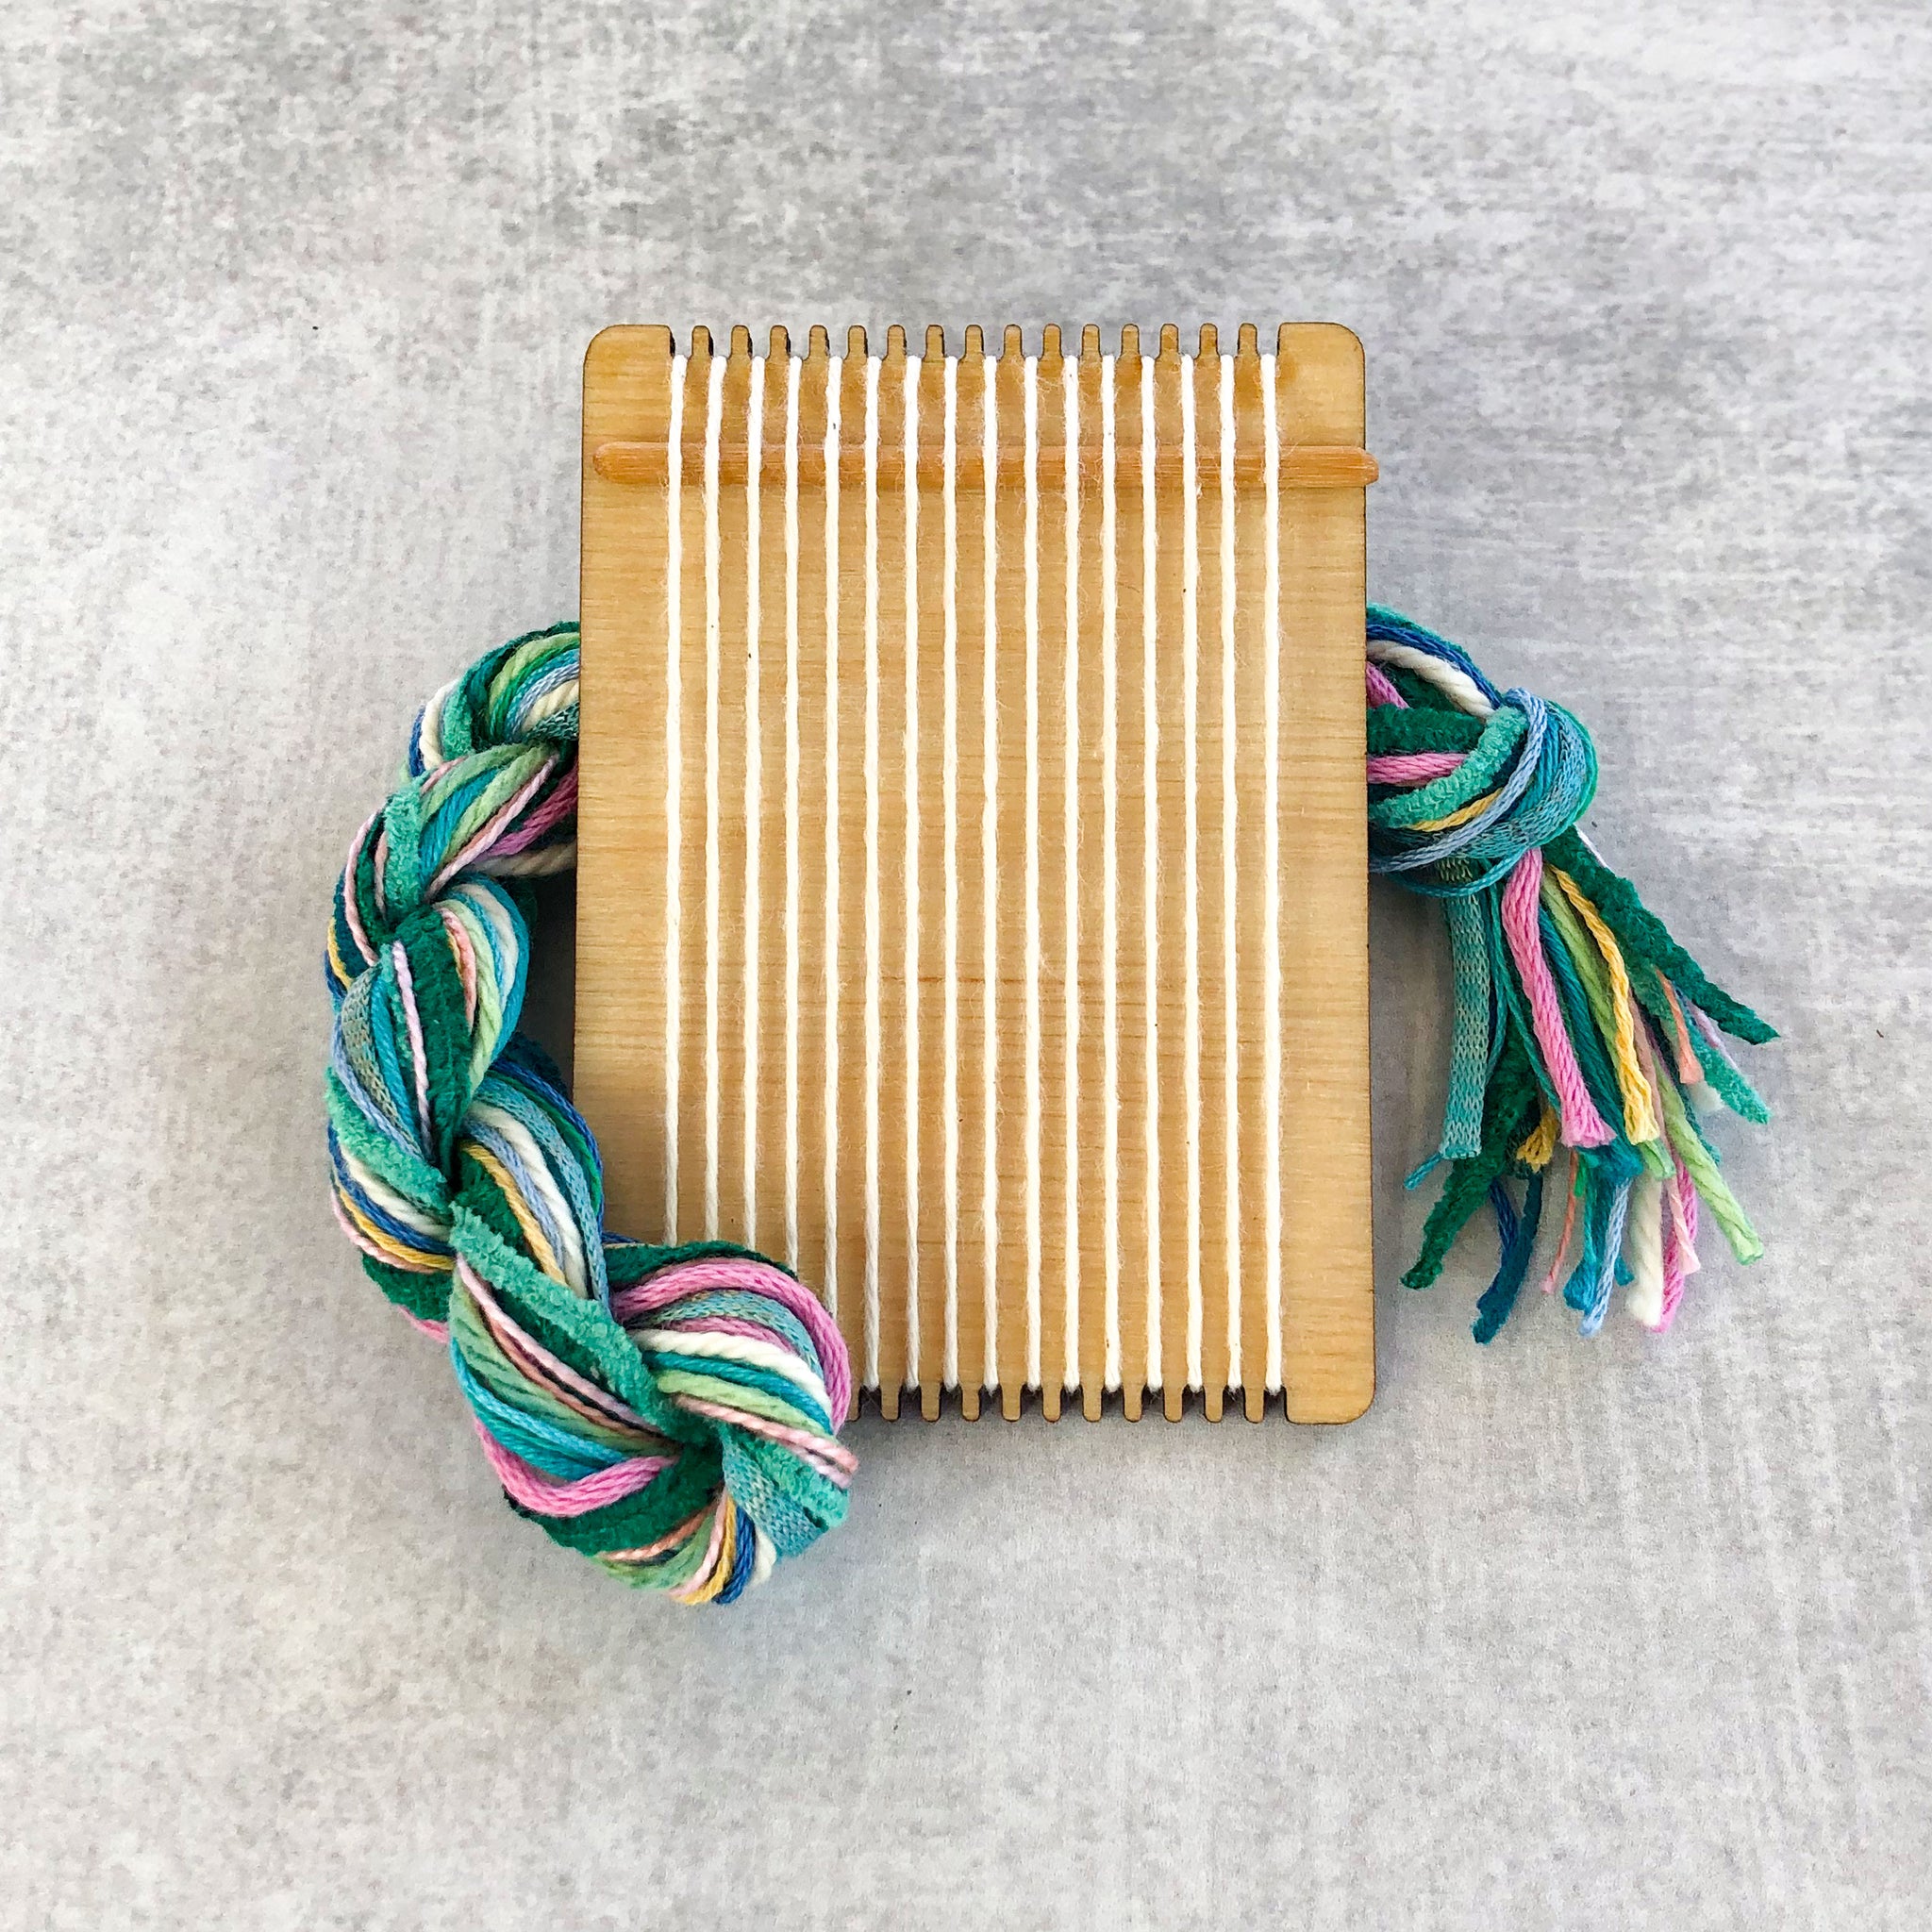 Simple Loom Weaving Kit – Coco and Duckie